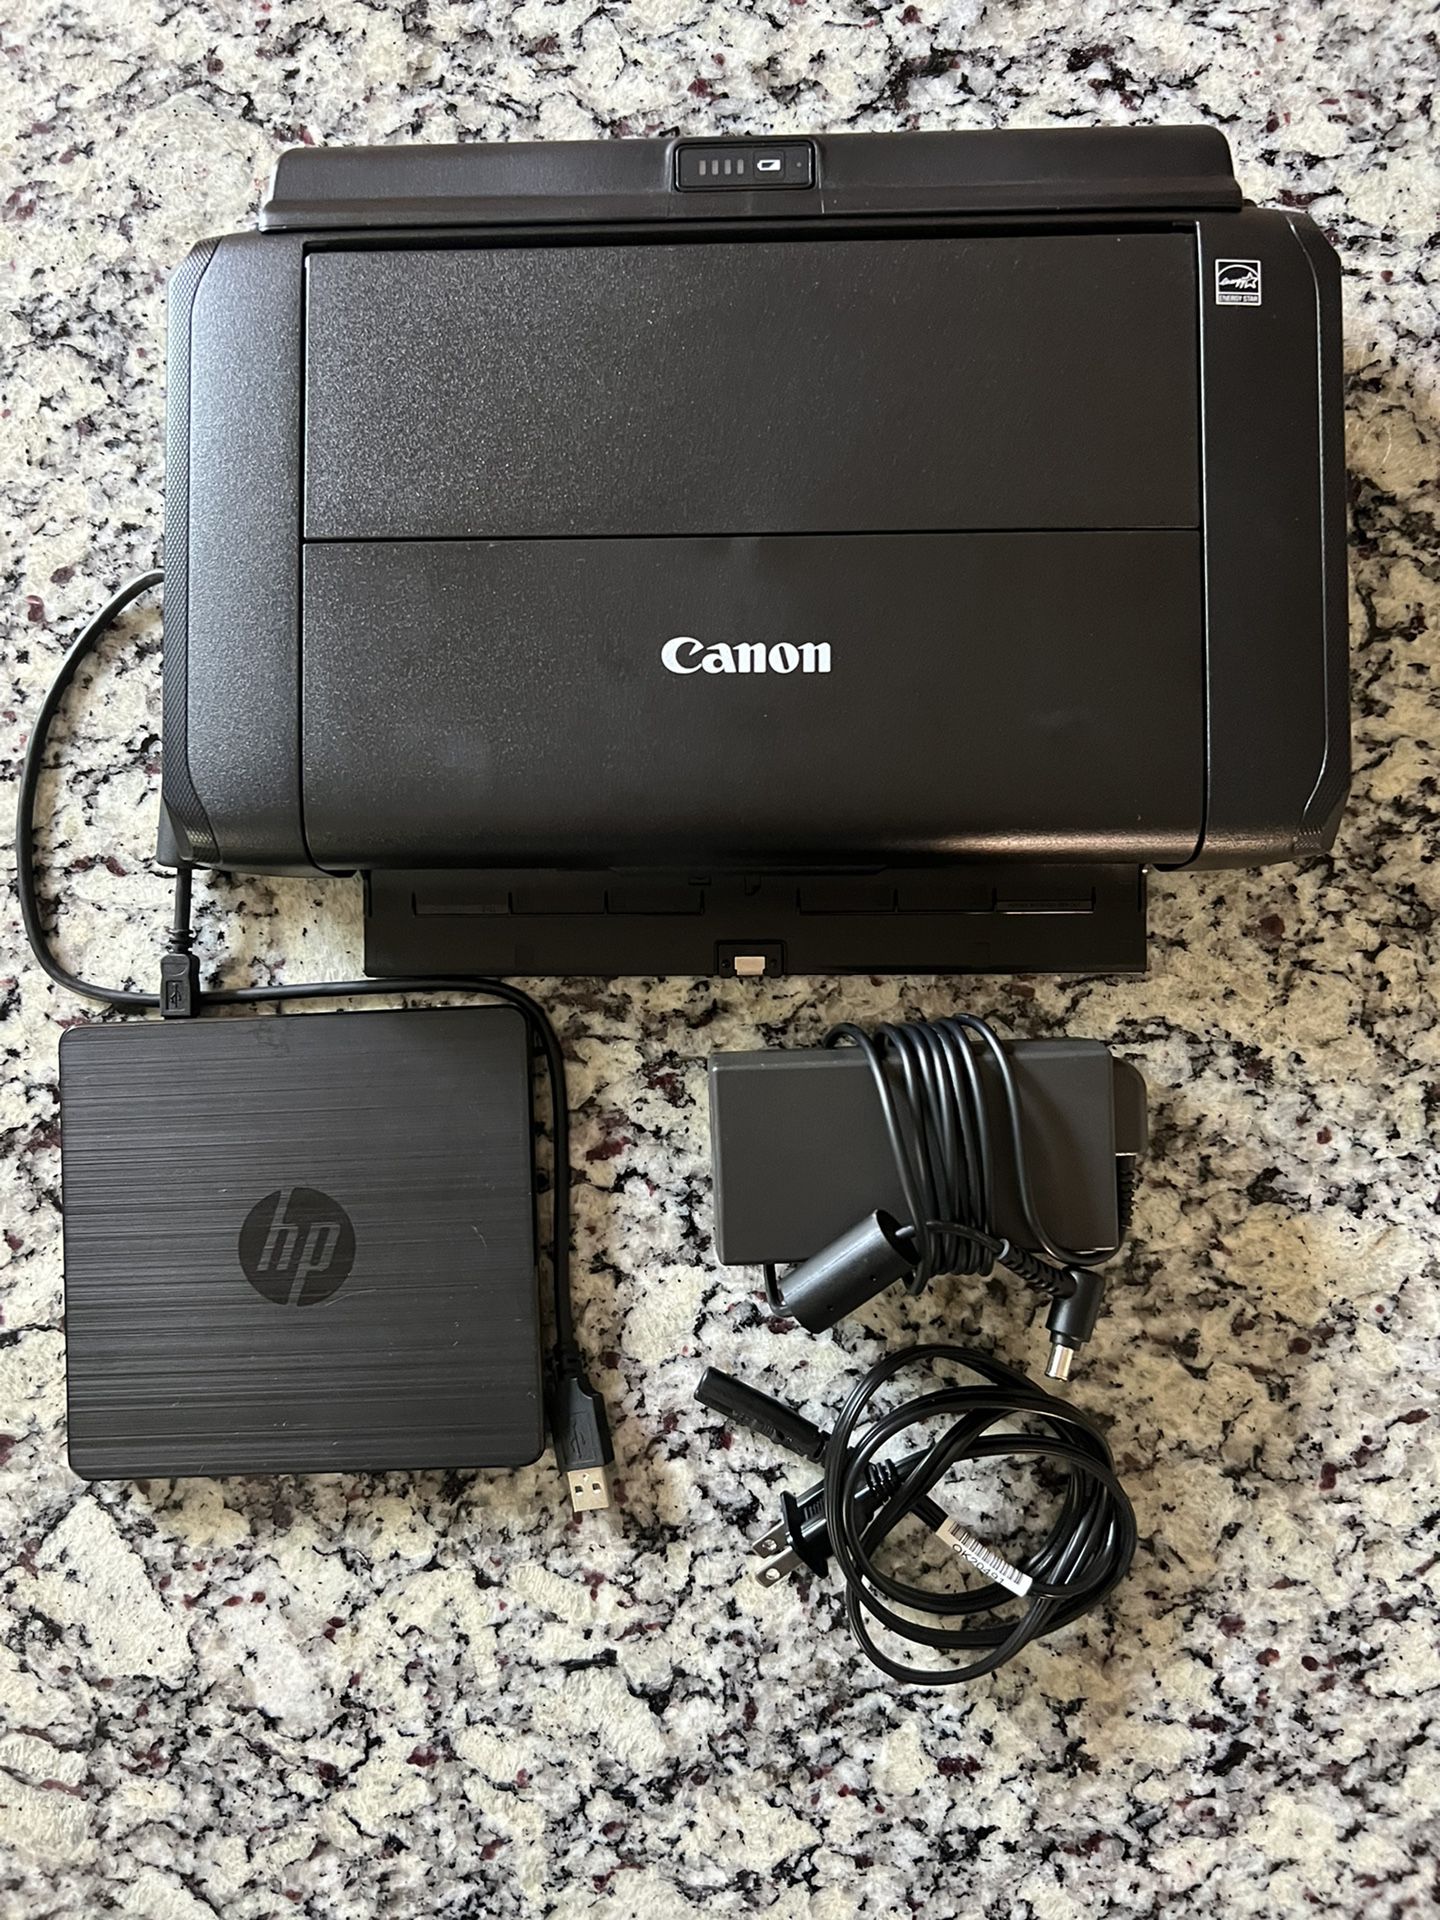 Cannon Picks TR-150 Portable Bluetooth Photo Printer